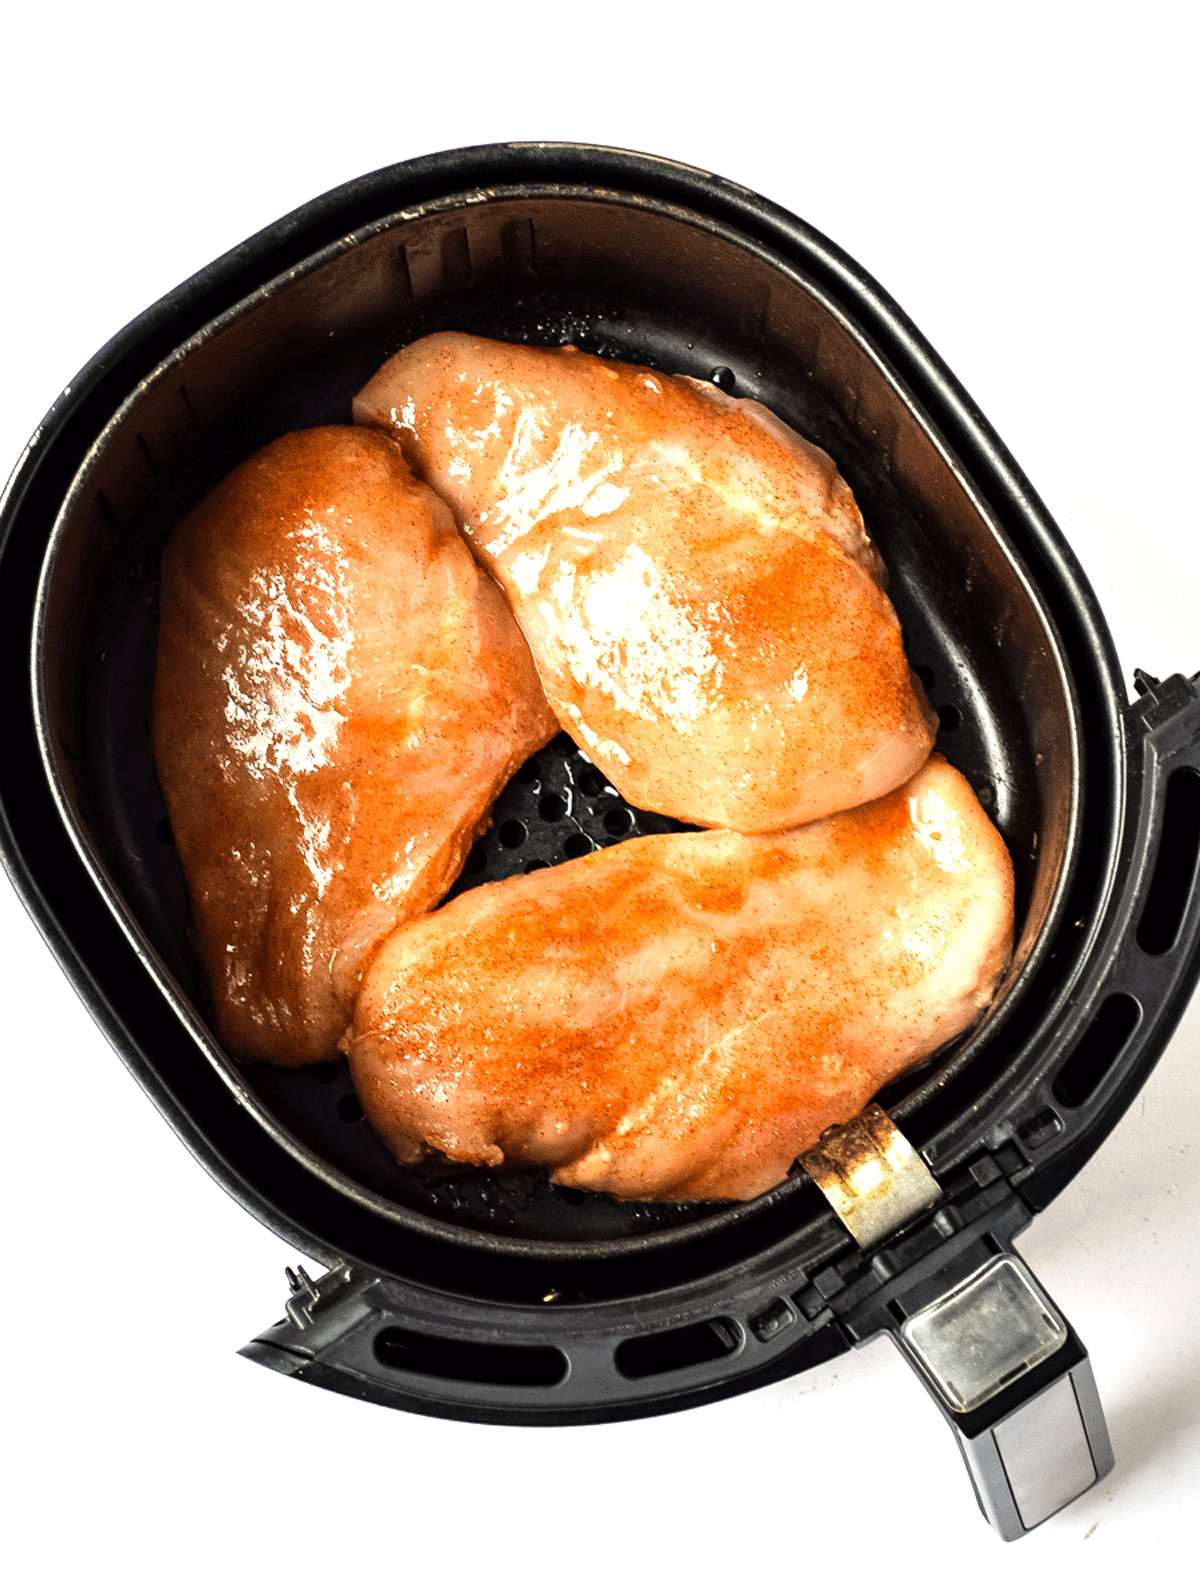 marinated chicken breasts arranged in air fryer